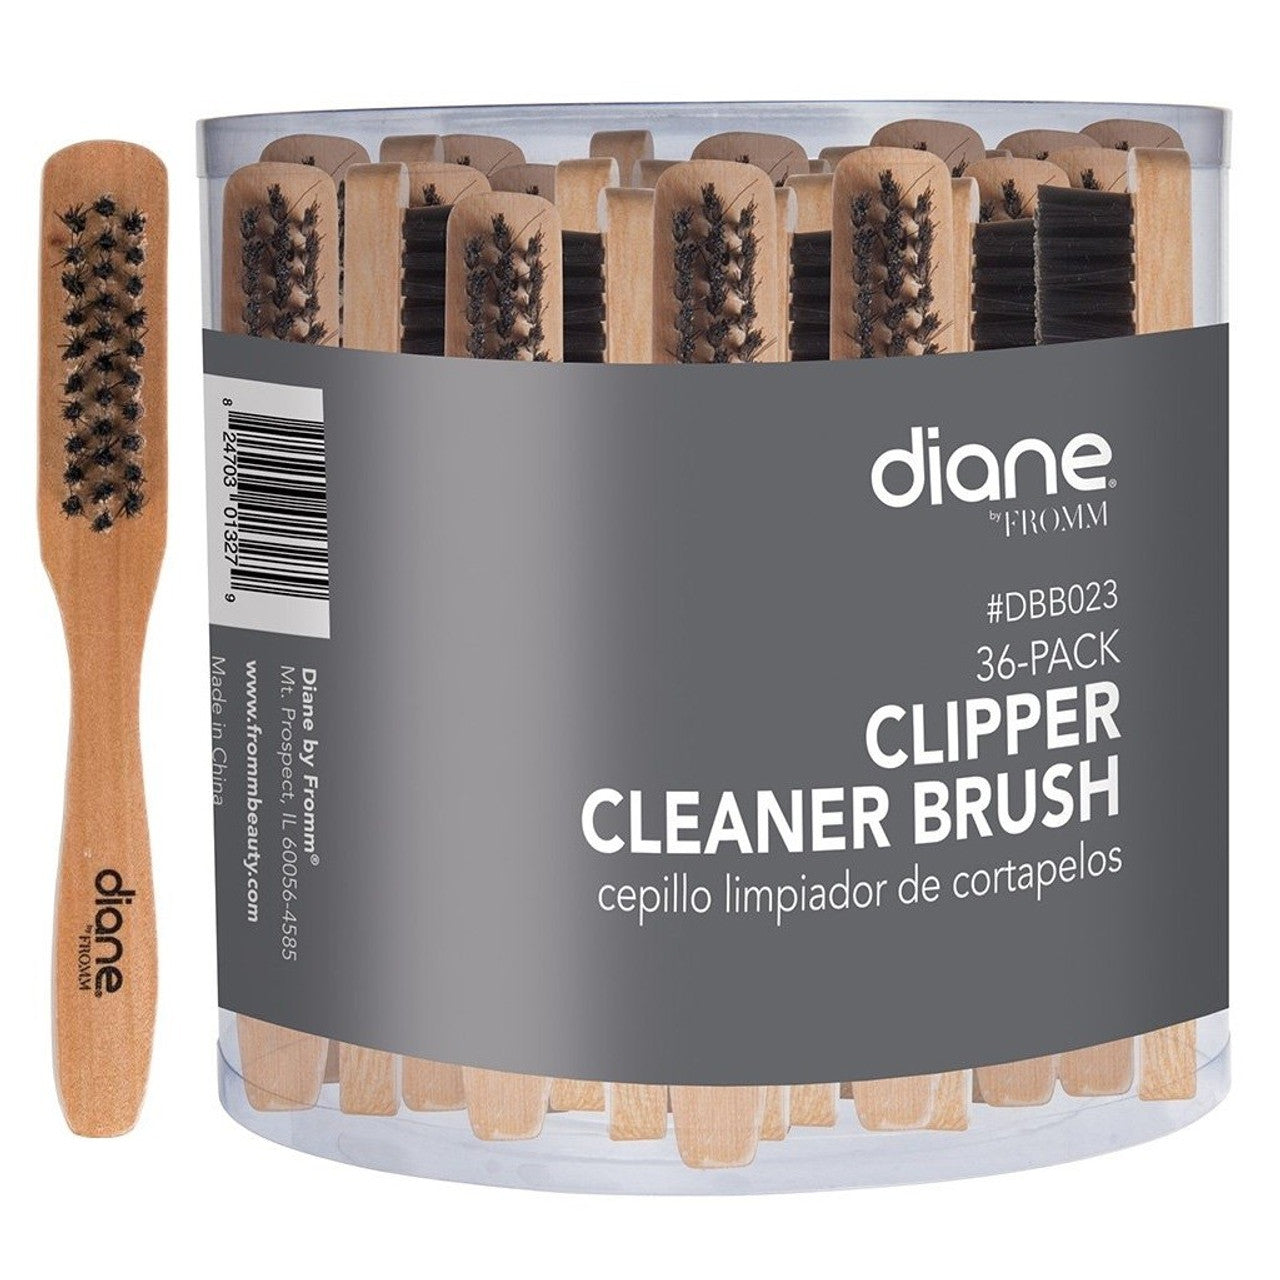 Diane Clipper Cleaning Brush - 1pc.